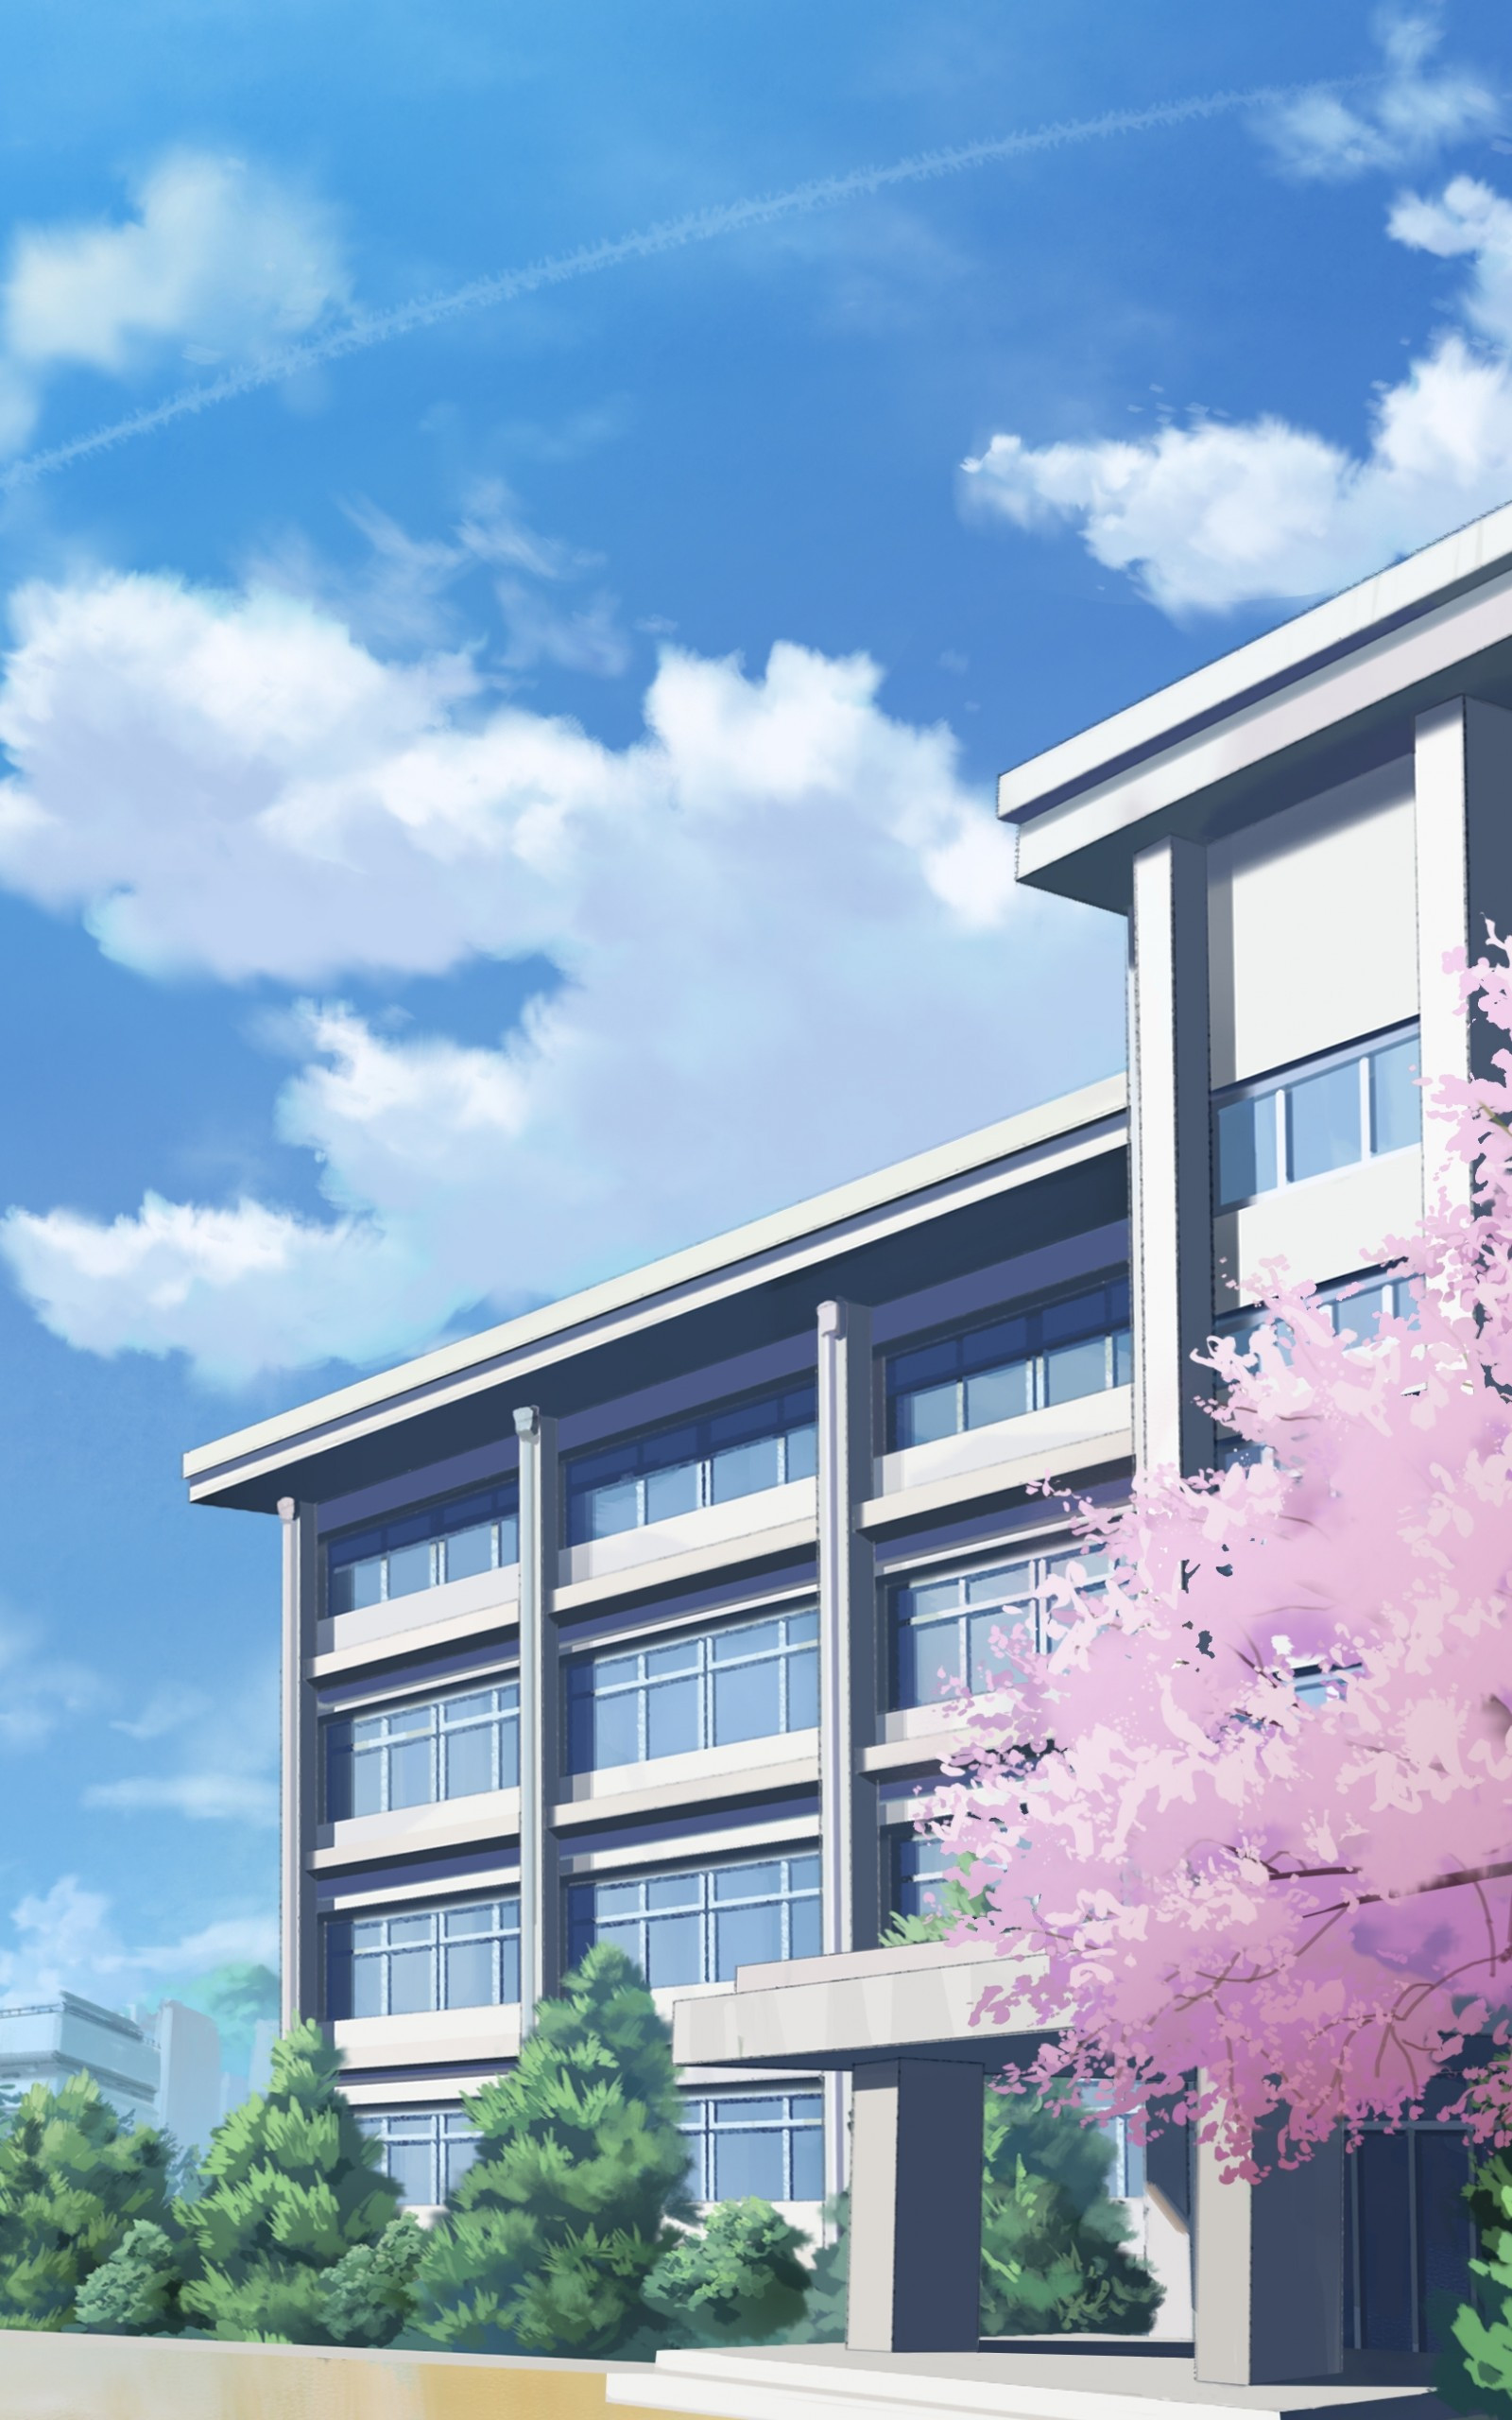 Anime School Building Sakura Blossom Clouds